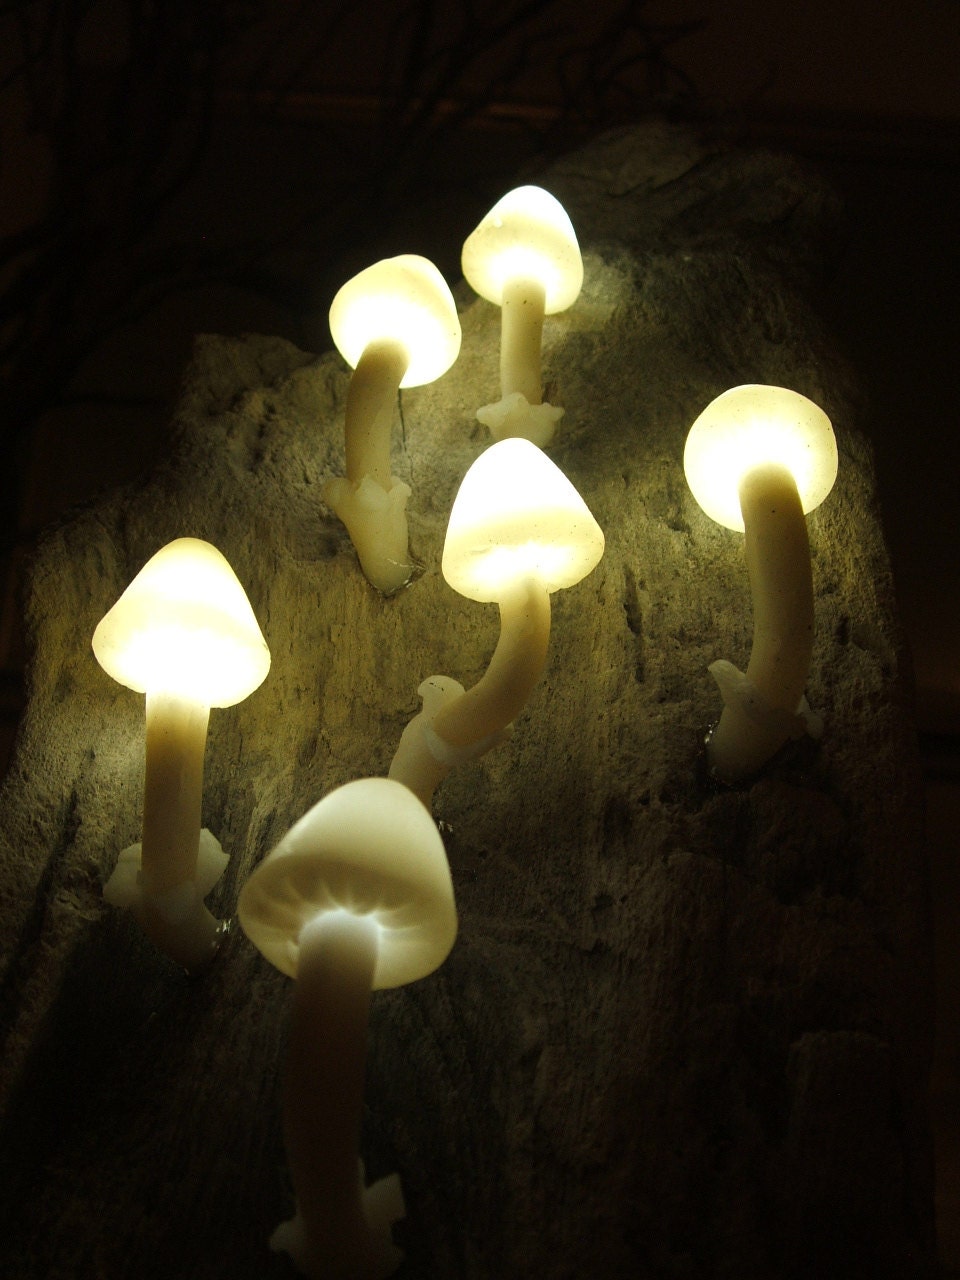 Magical Mushrooms. Shroom and Driftwood l.e.d. Mood Lighting Lamp Sculpture.